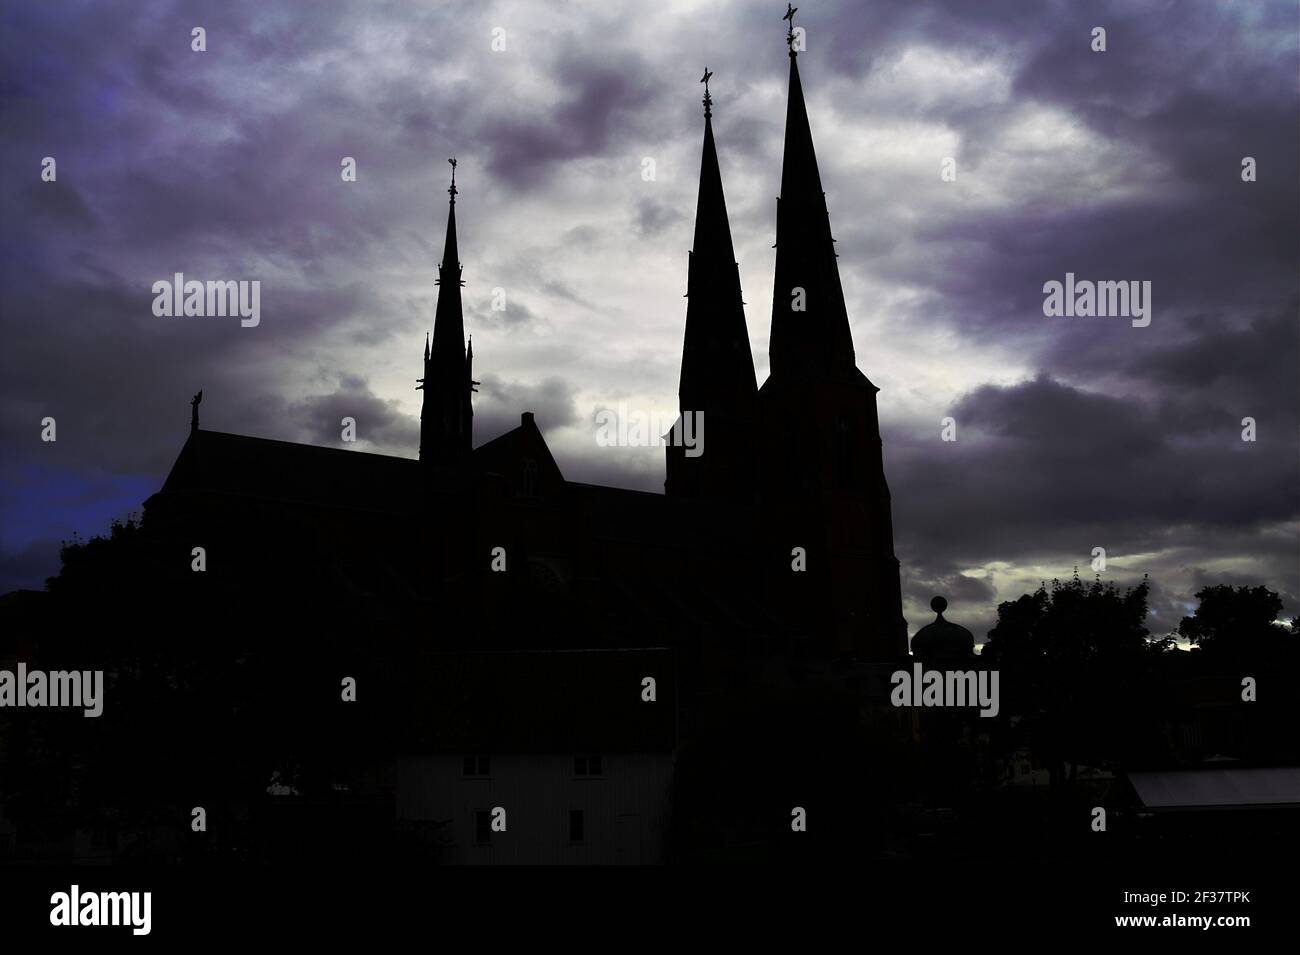 Sweden, Schweden; Uppsala Cathedral - Exterior; Dom zu Uppsala - Aussenansicht; Dark outline against the sky. Dunkle Umrisse gegen den Himmel. Katedra Stock Photo